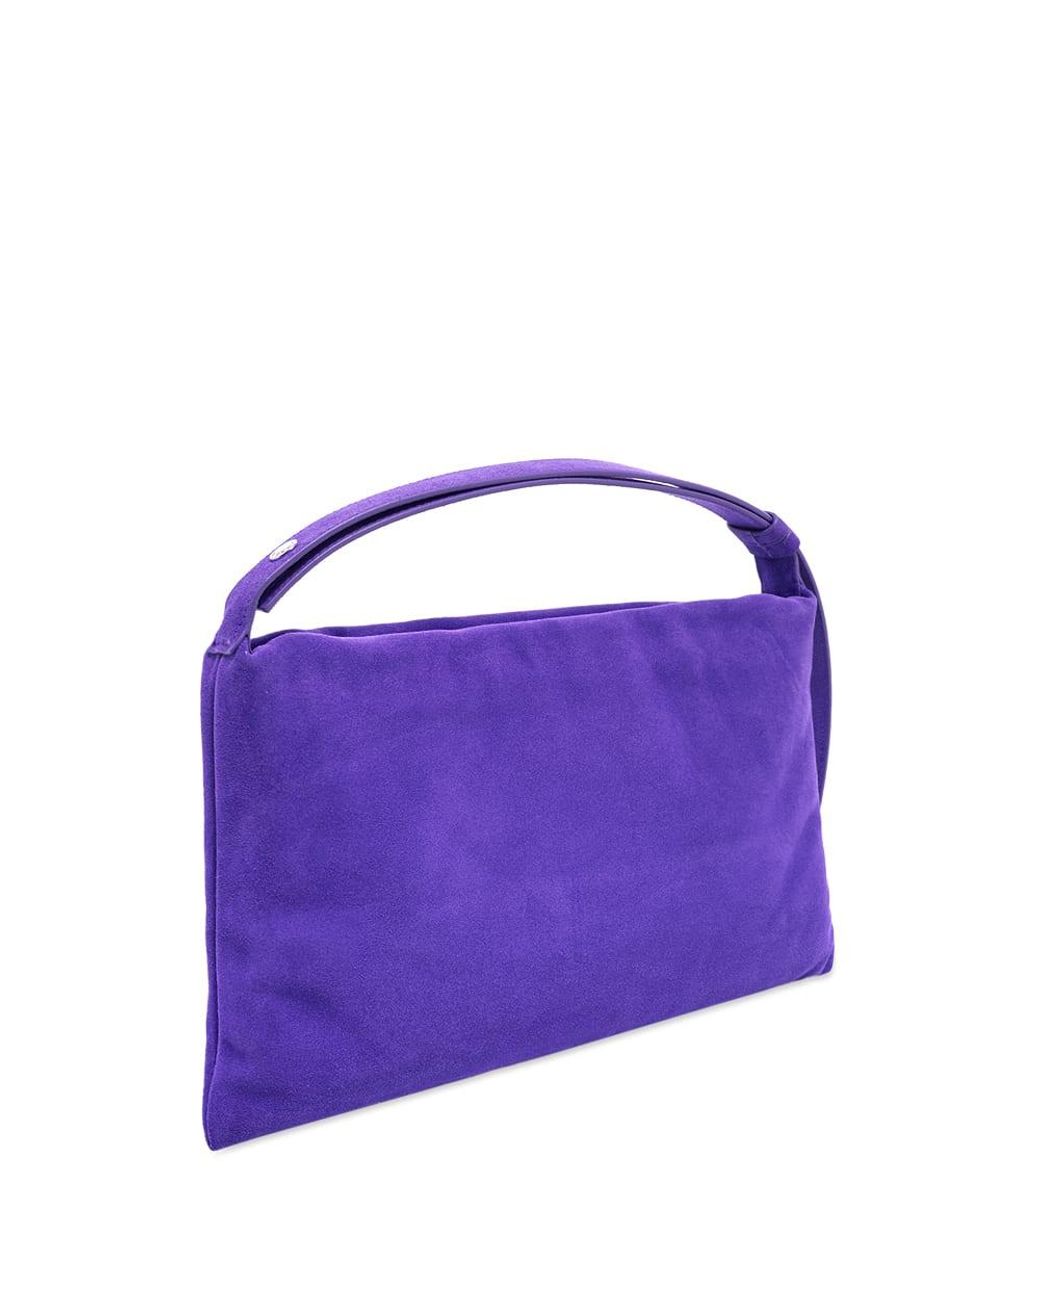 Simon Miller Mini Puffin Bag in Purple | Lyst